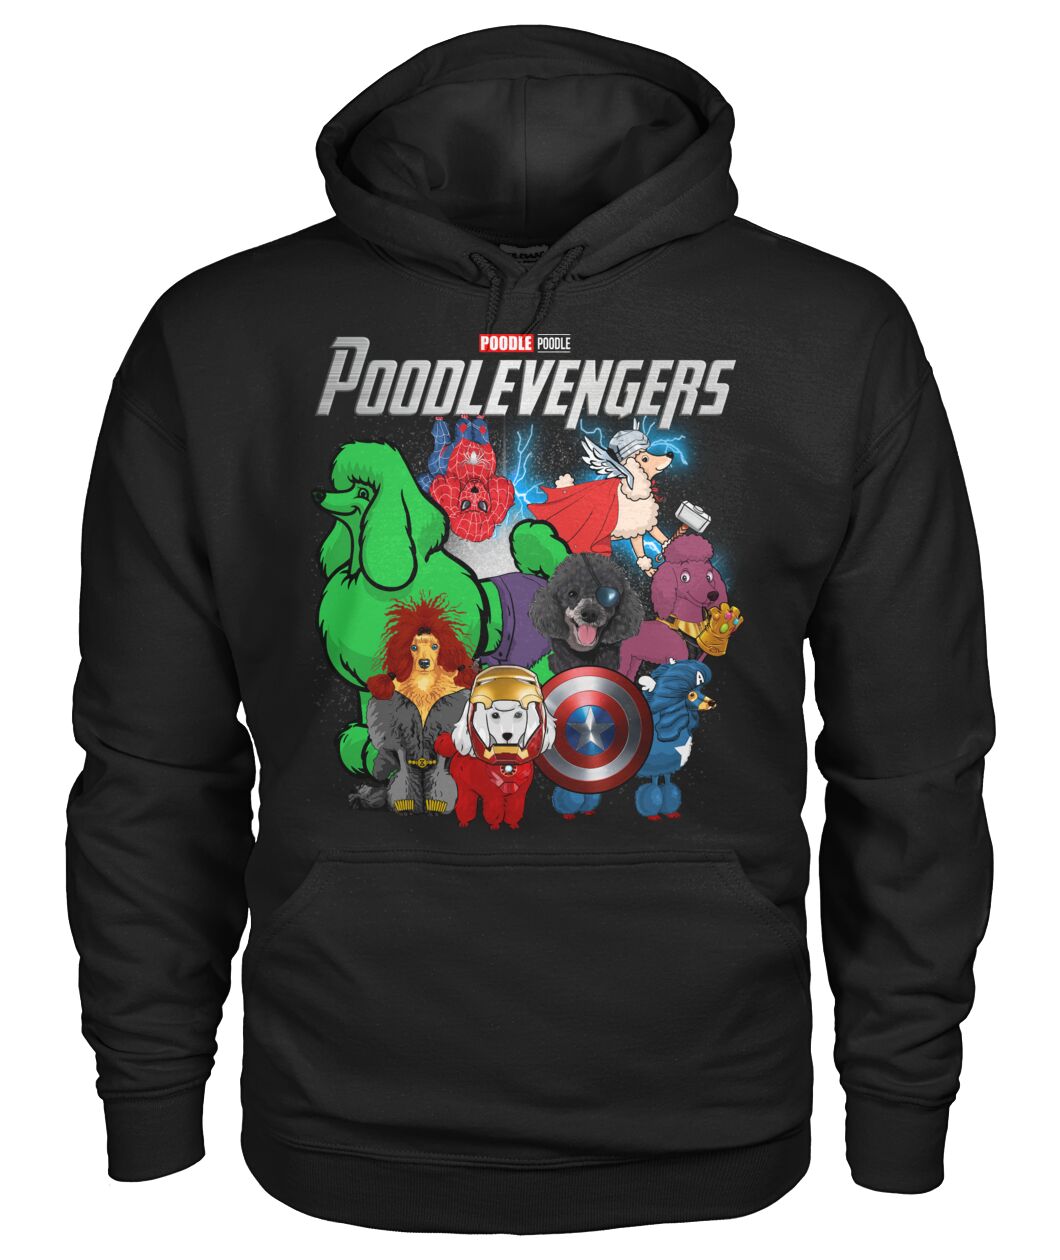 Poodlevengers 3D Hoodie, Shirt 9